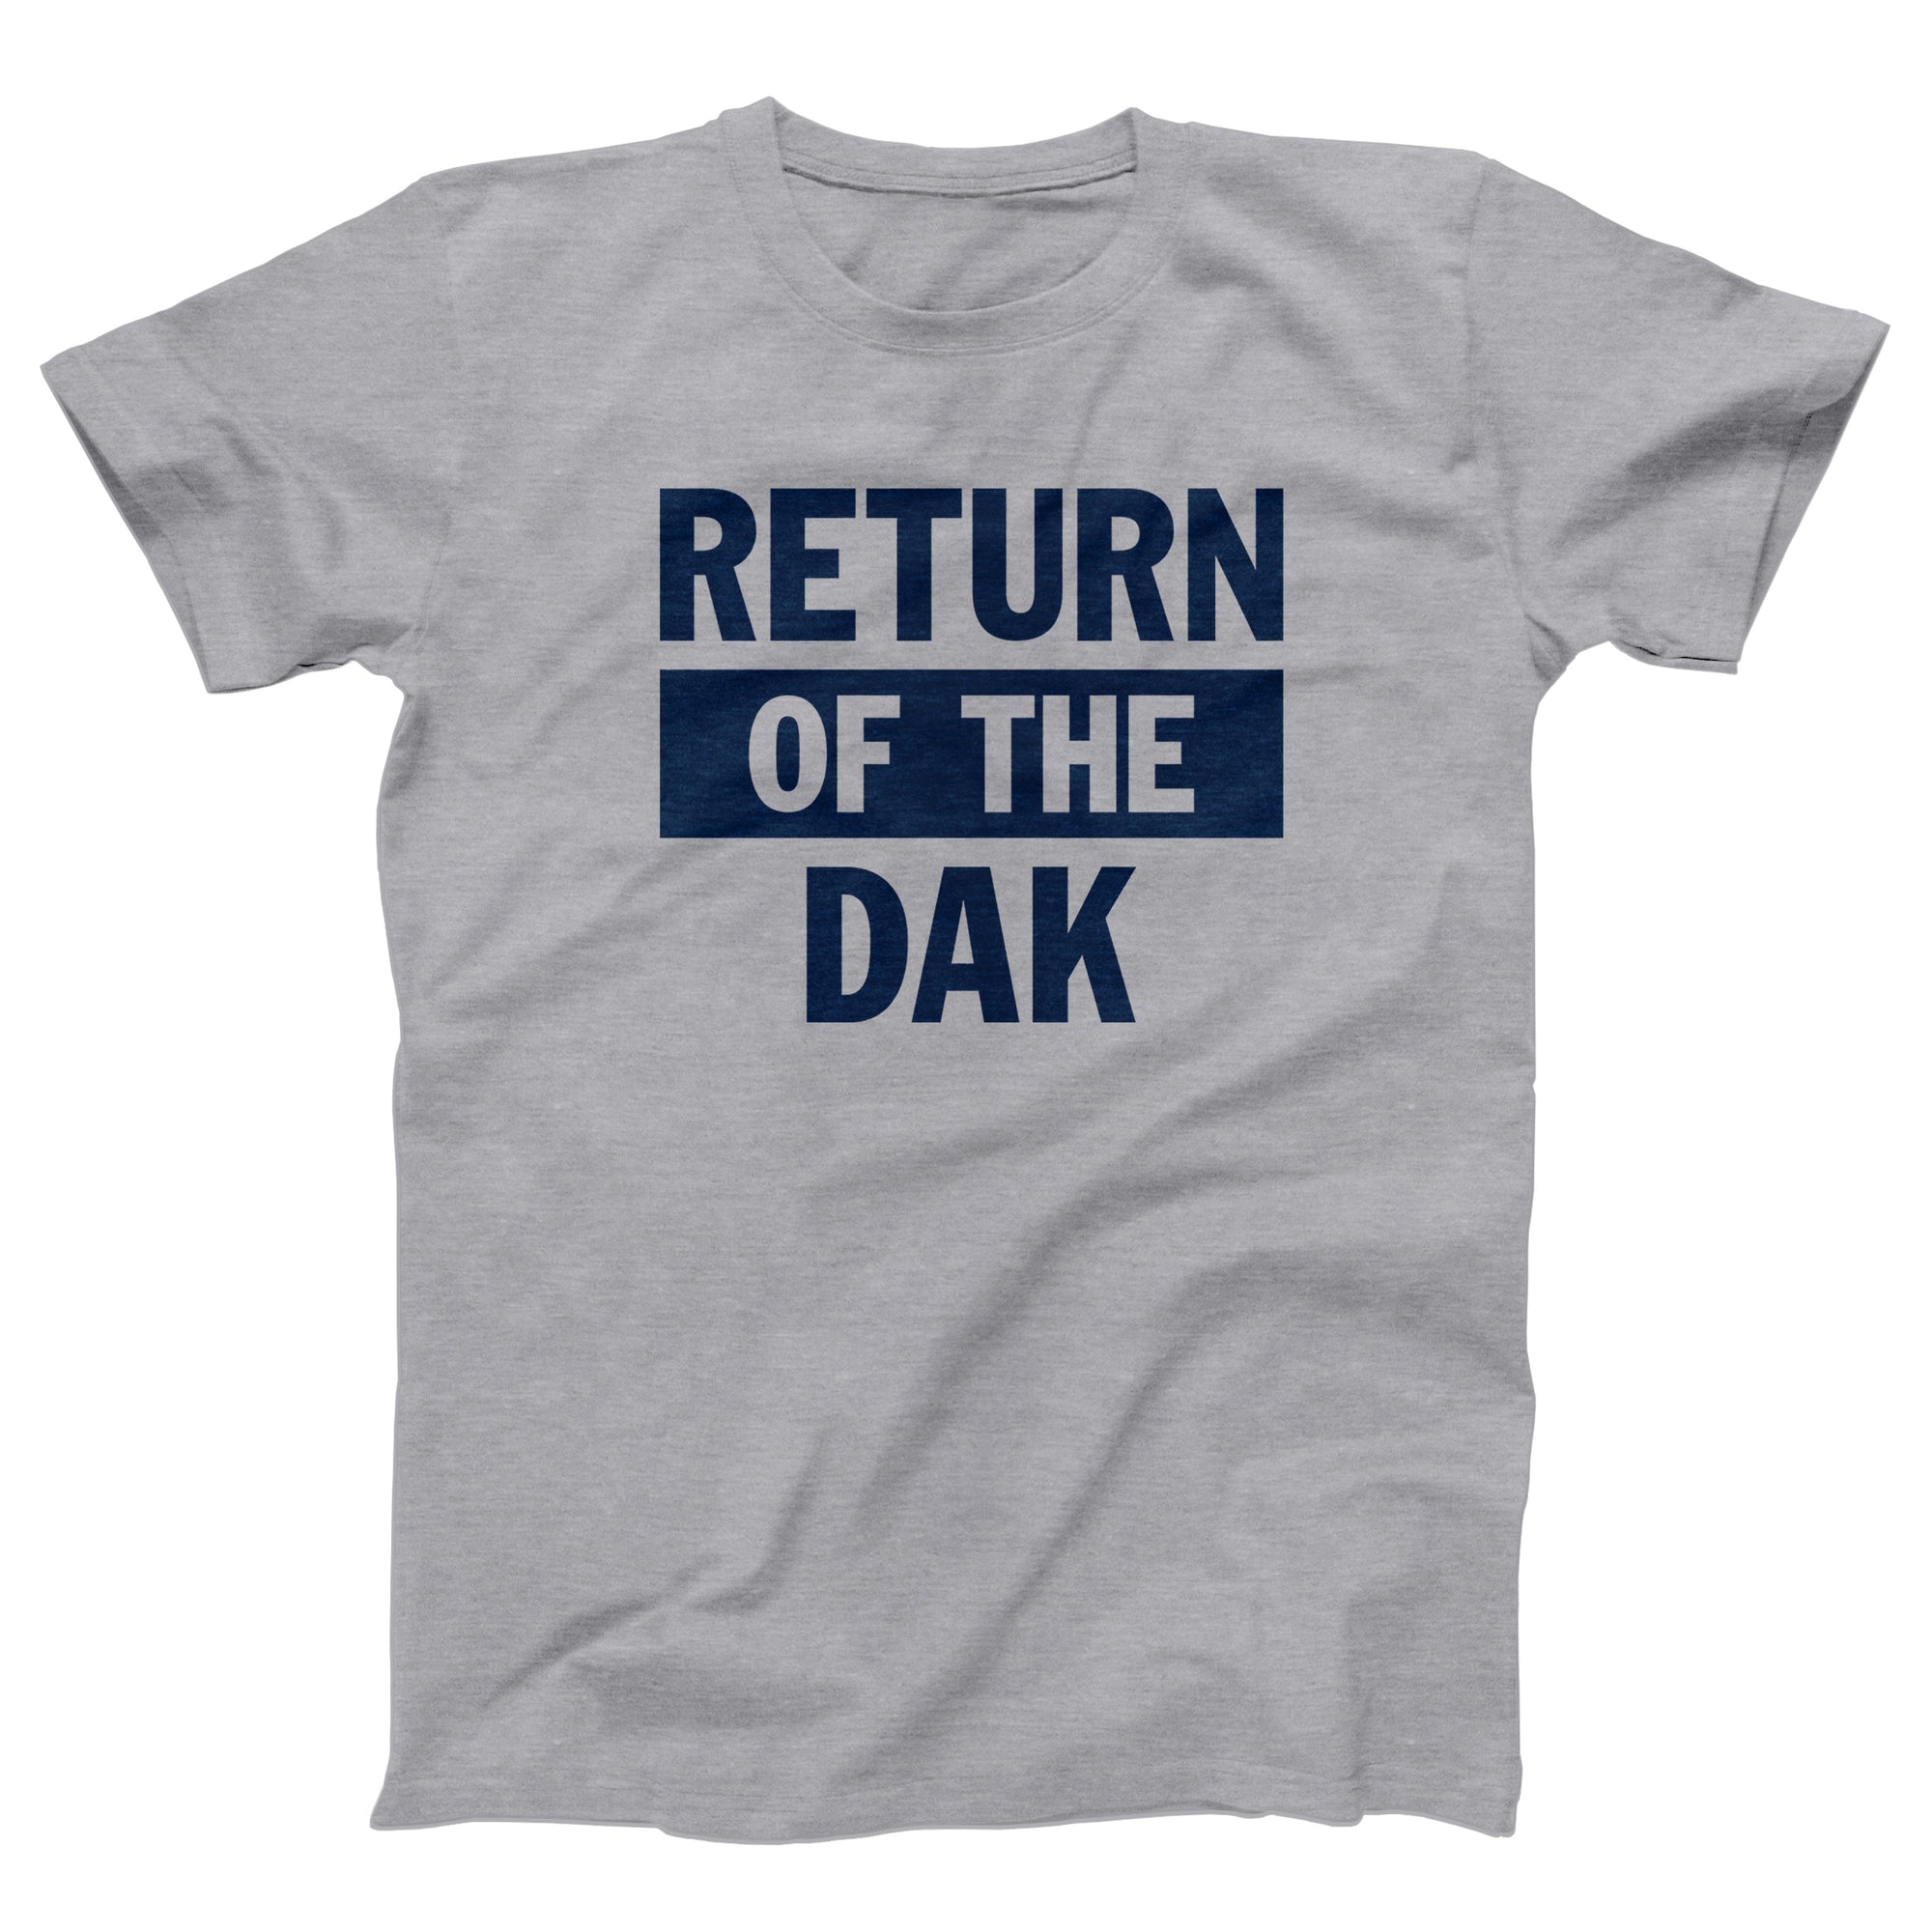 Return of the Dak Adult Unisex T-Shirt - anishphilip